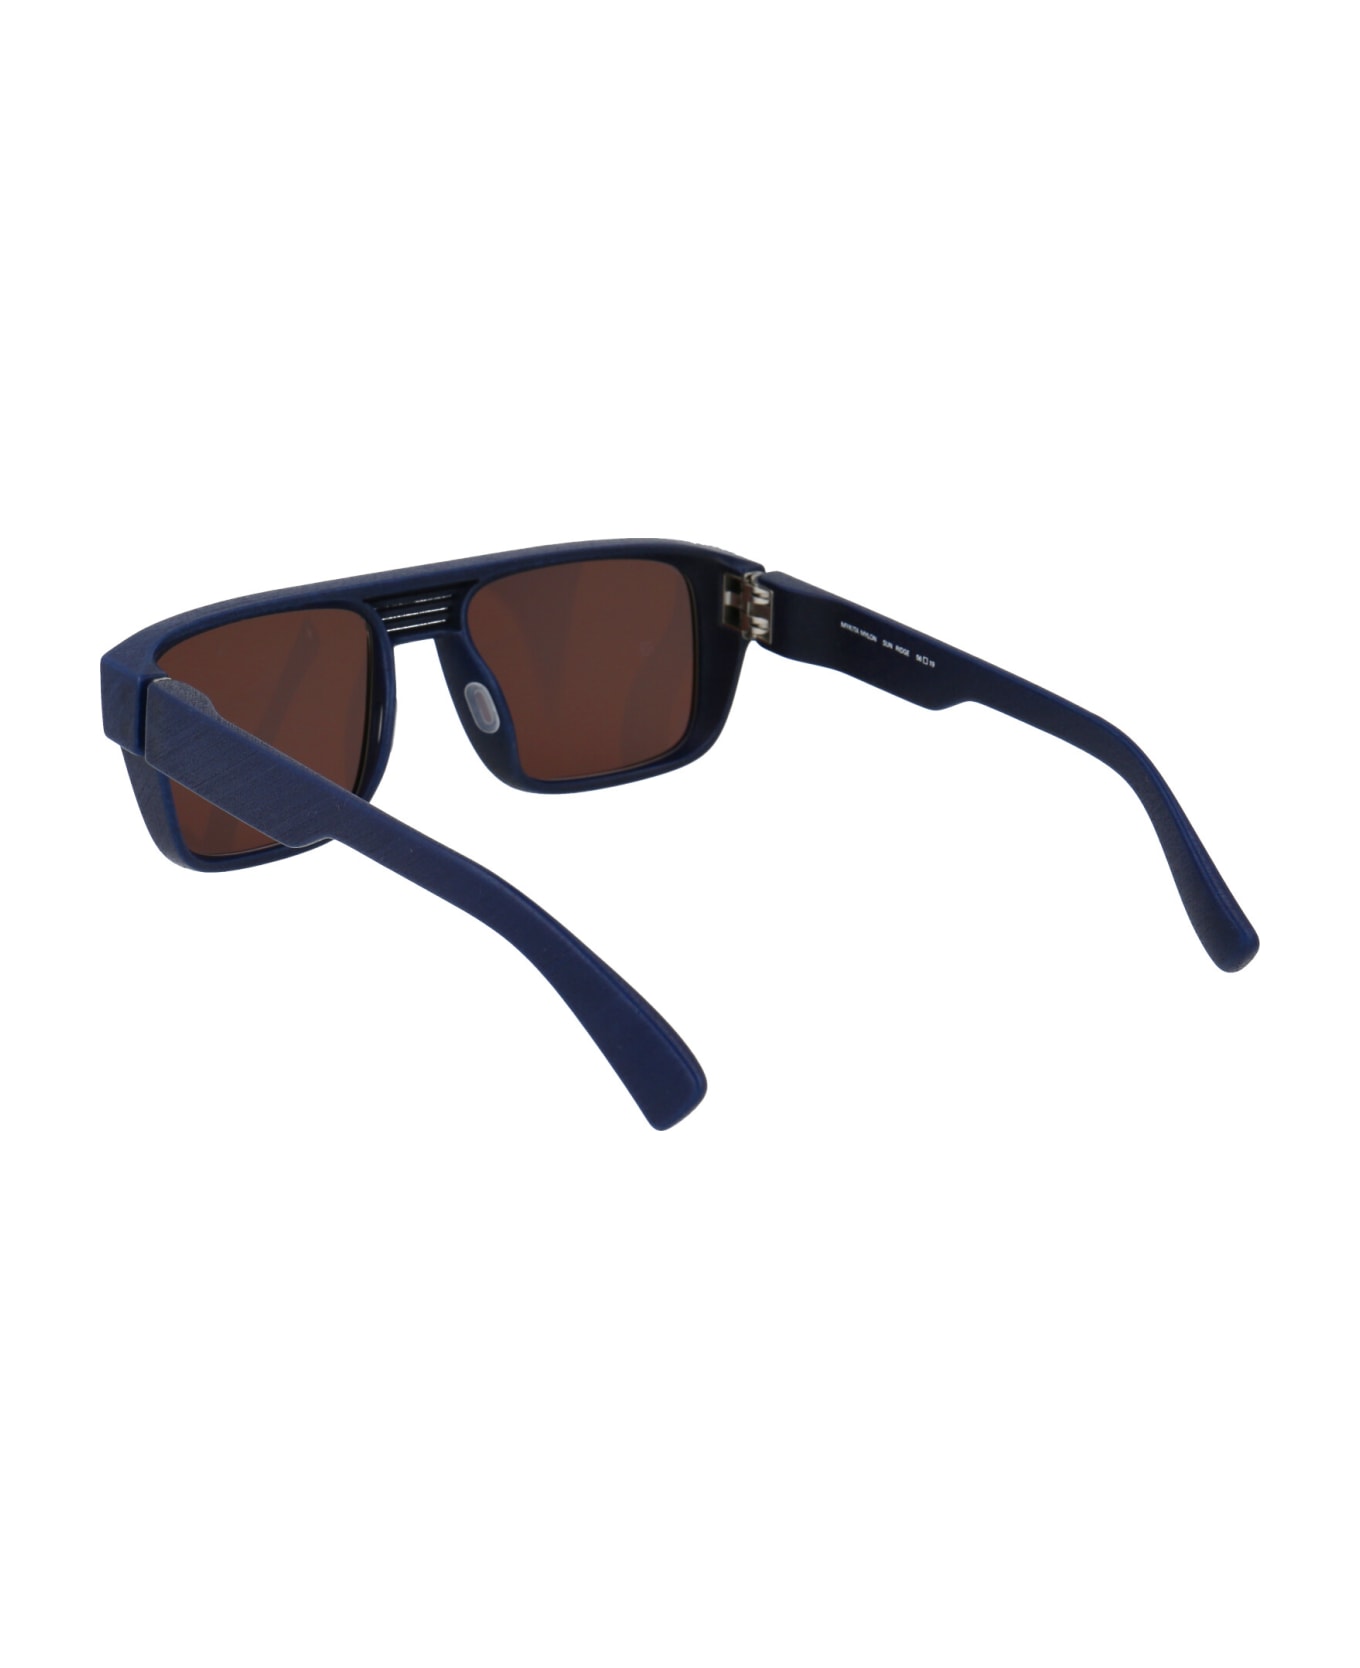 Mykita Ridge Sunglasses - 325 MD25 Navy Blue Brown Solid 